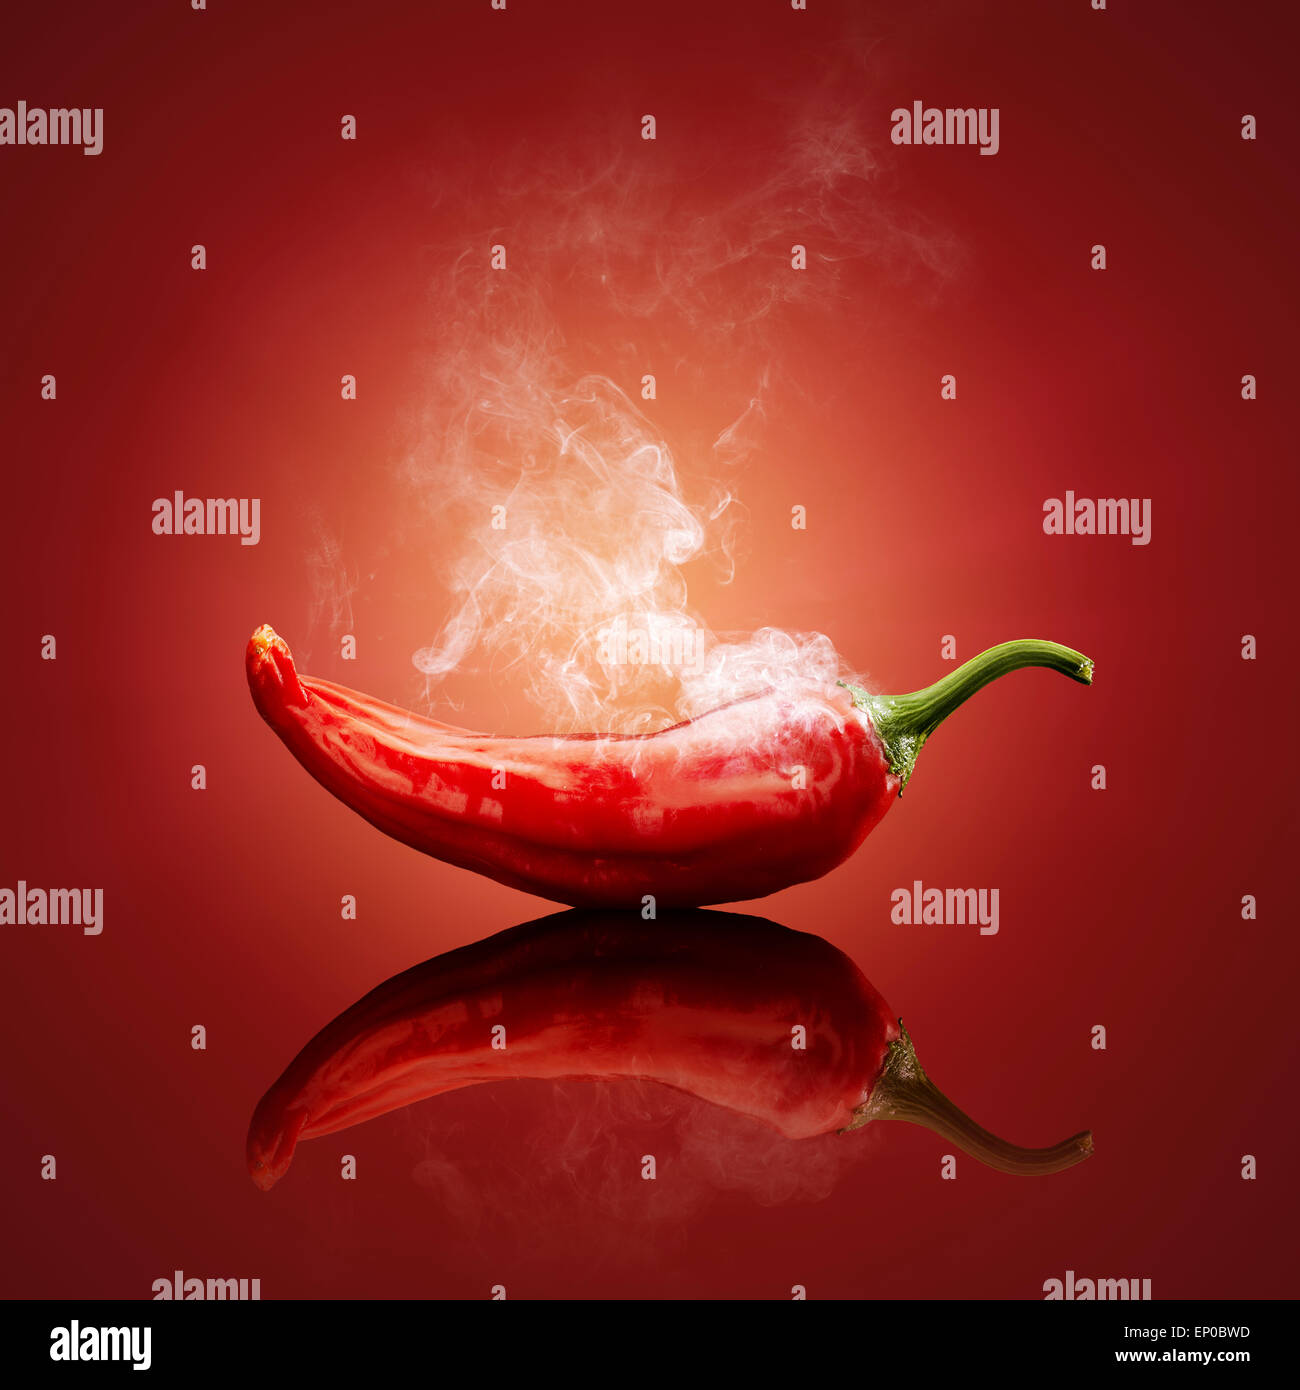 Fumar caliente chili rojo con reflexión Foto de stock